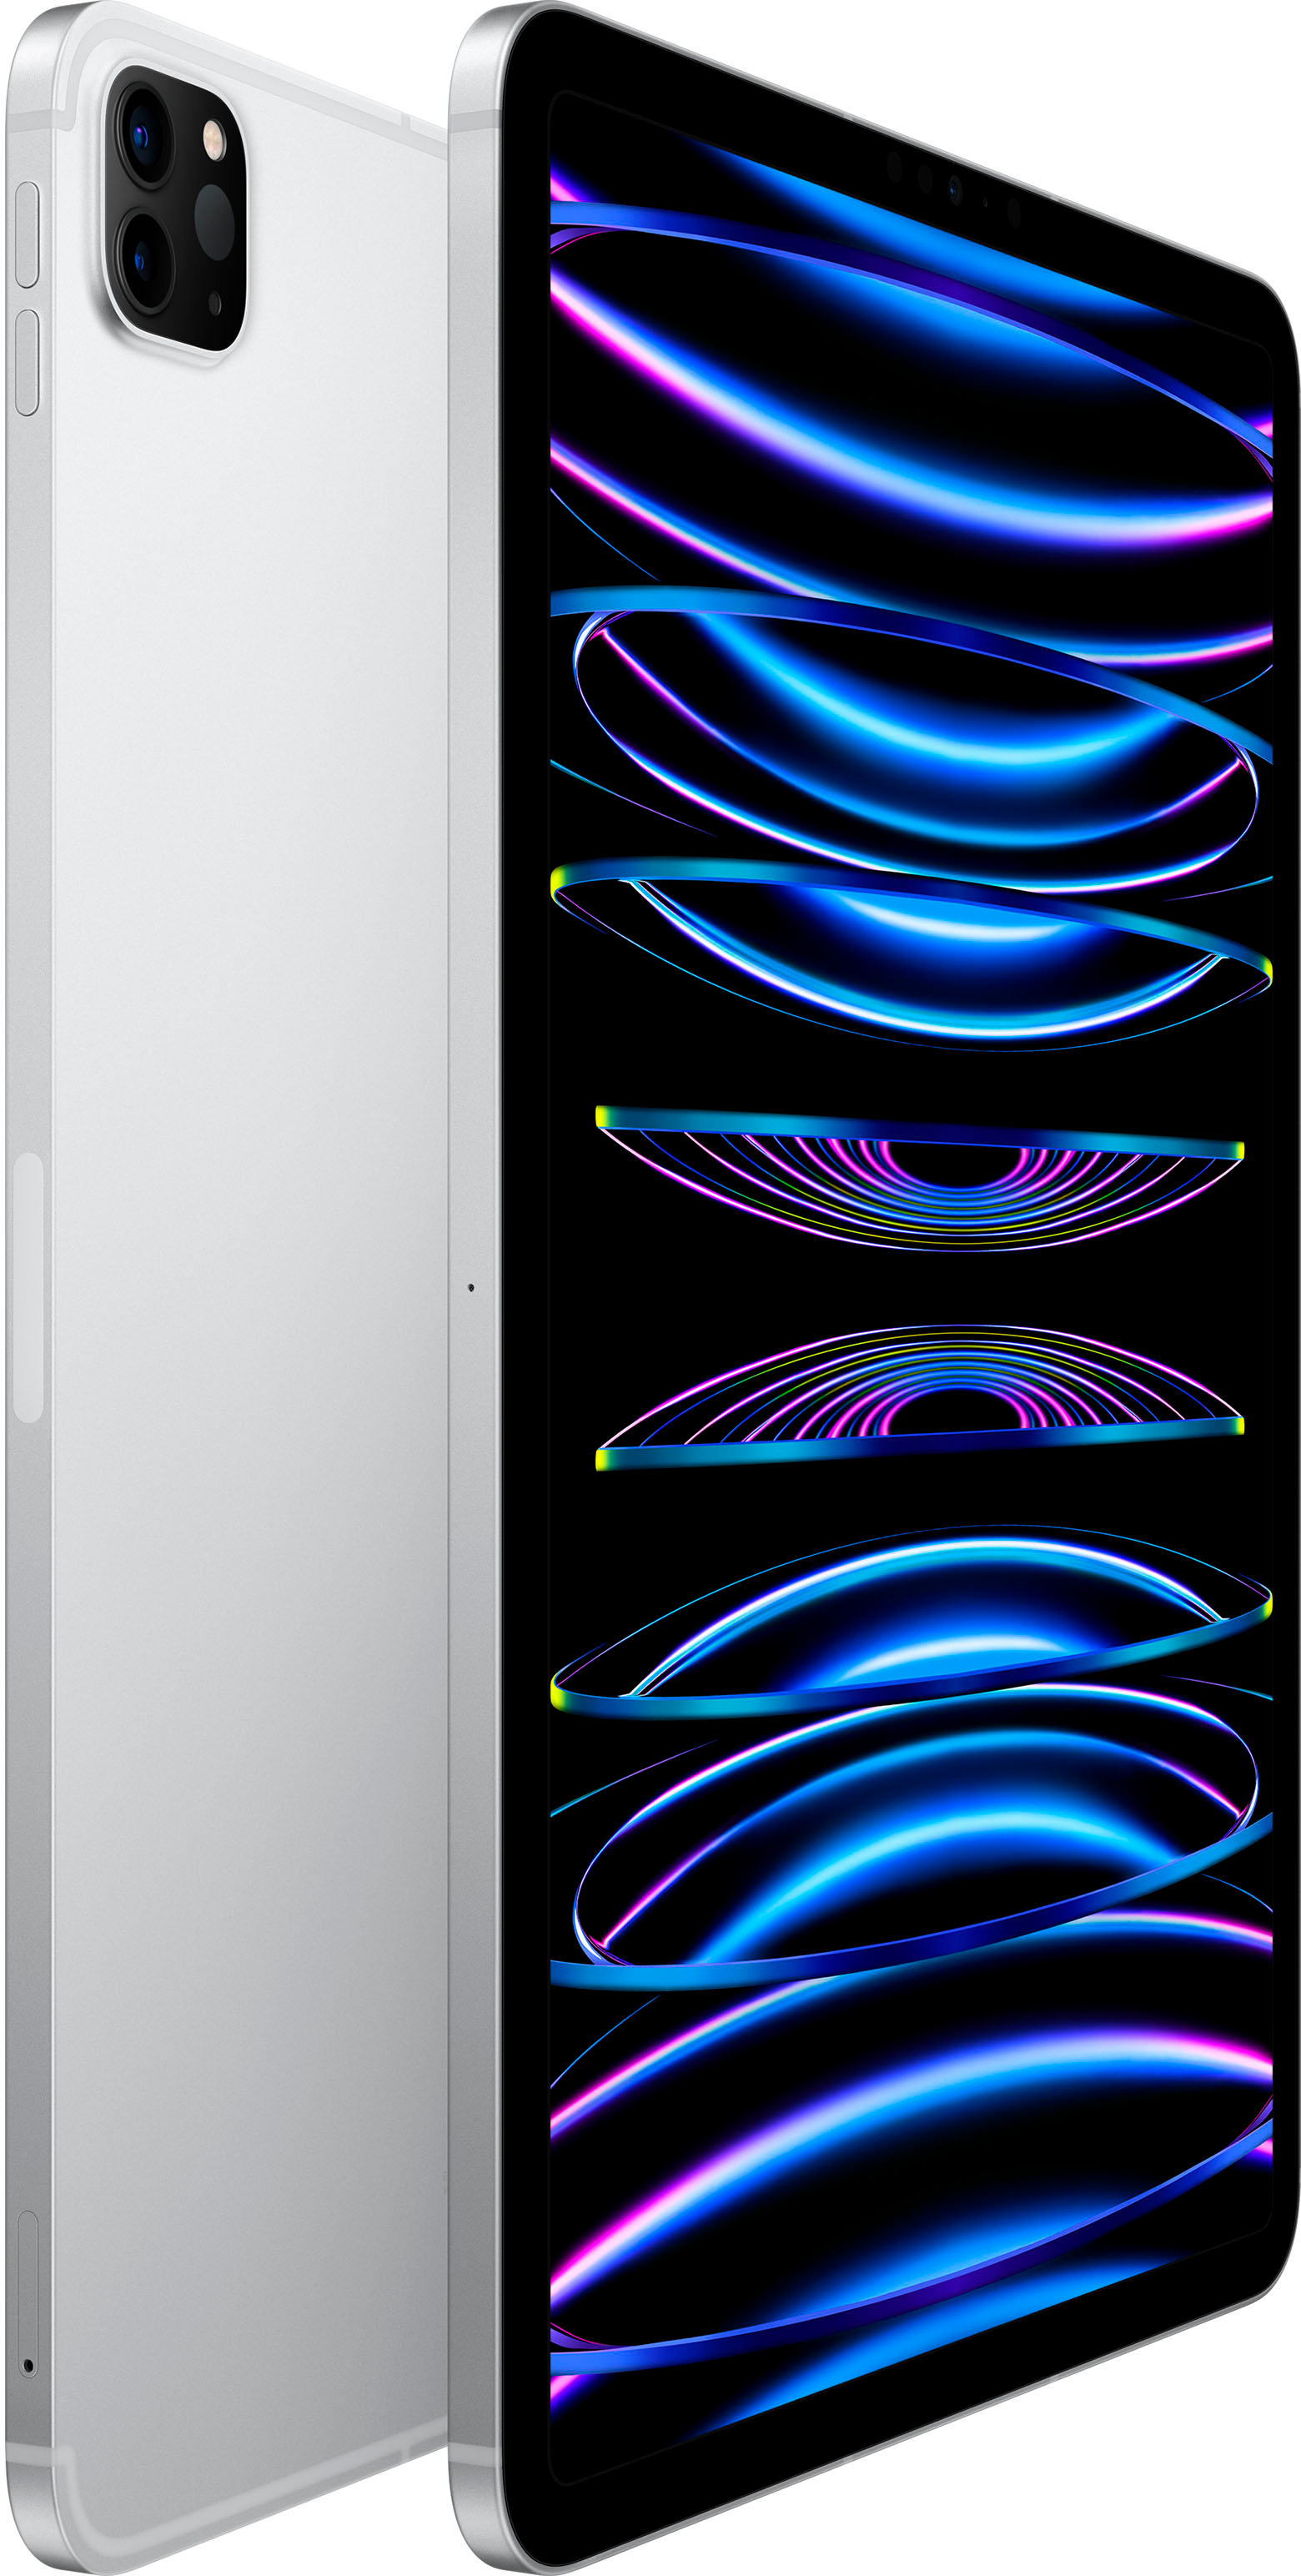 Apple 11-Inch iPad Pro (Latest Model) with Wi-Fi 256GB Silver 